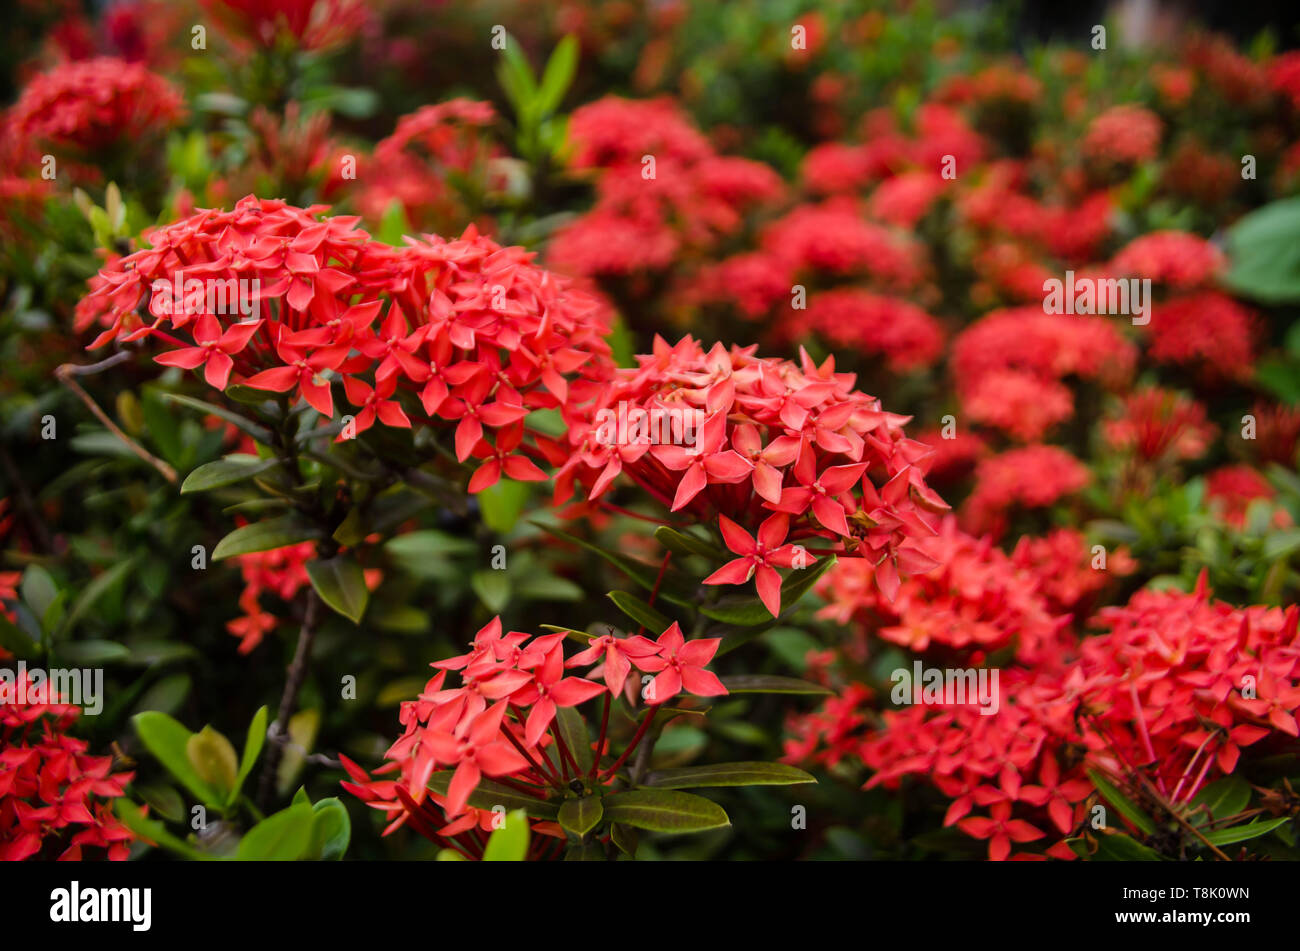 Ixora coccinea flowers in fulll bloom in a garden Stock Photo